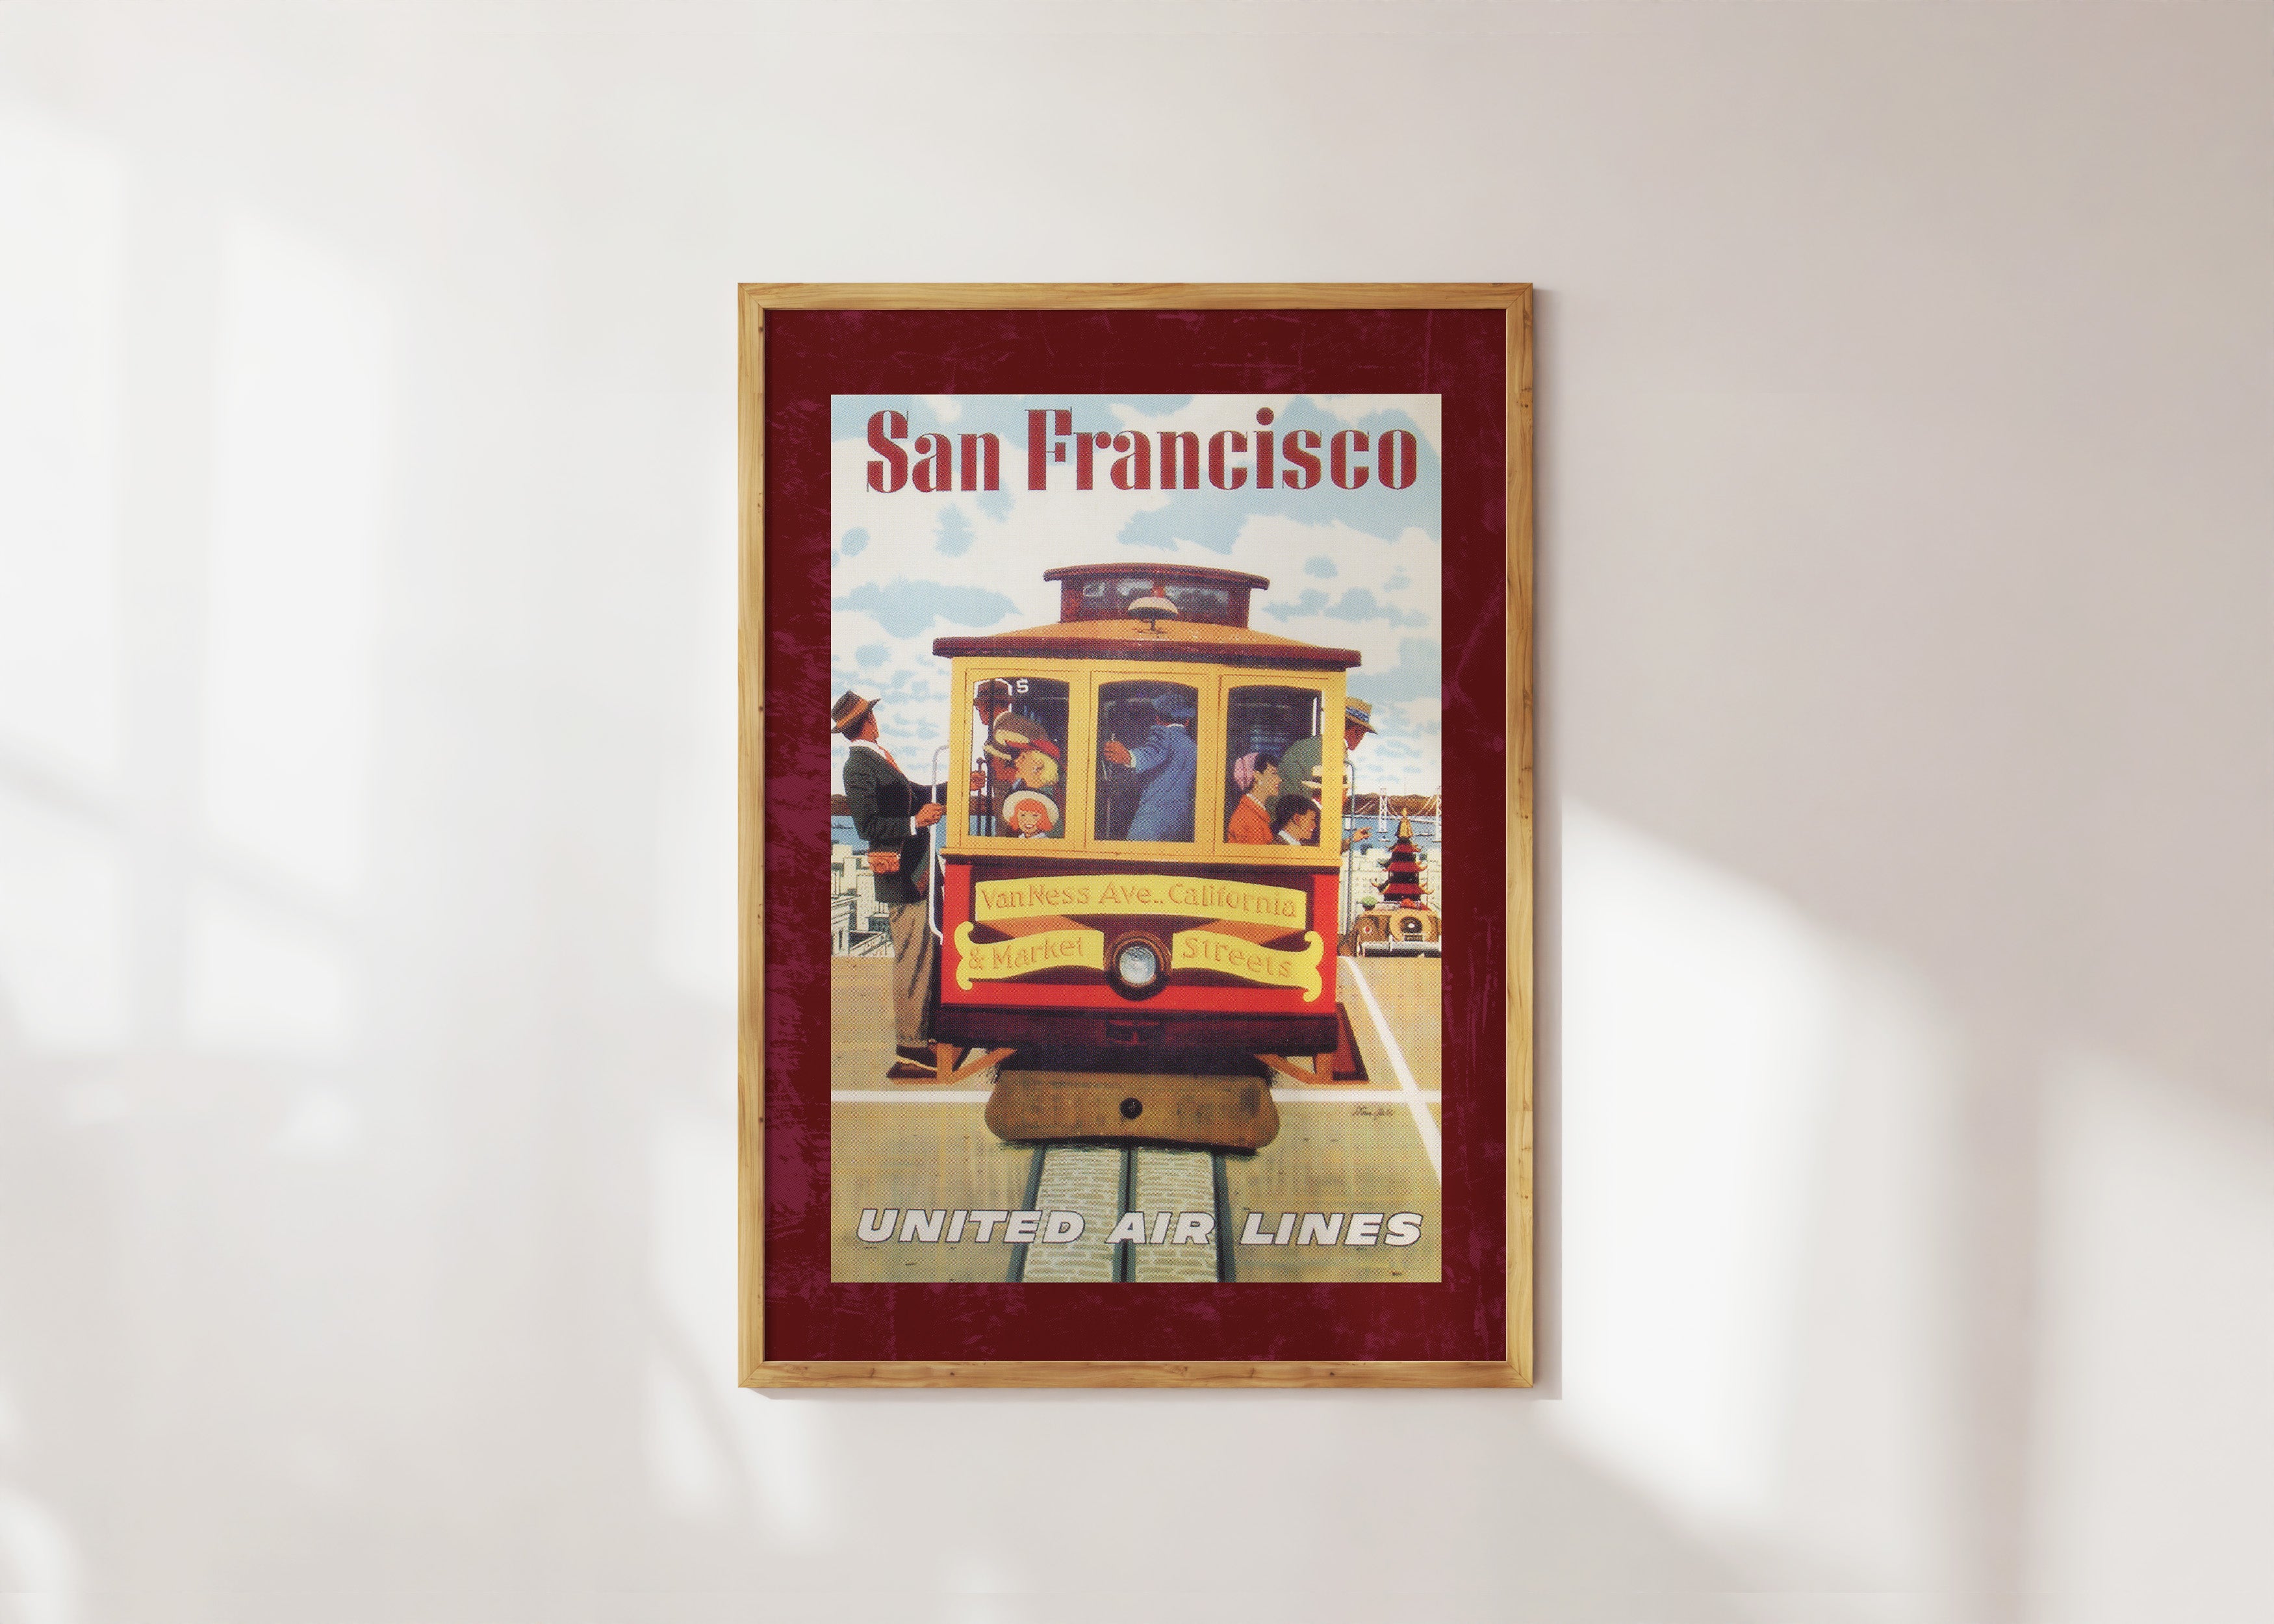 San Francisco Art Print